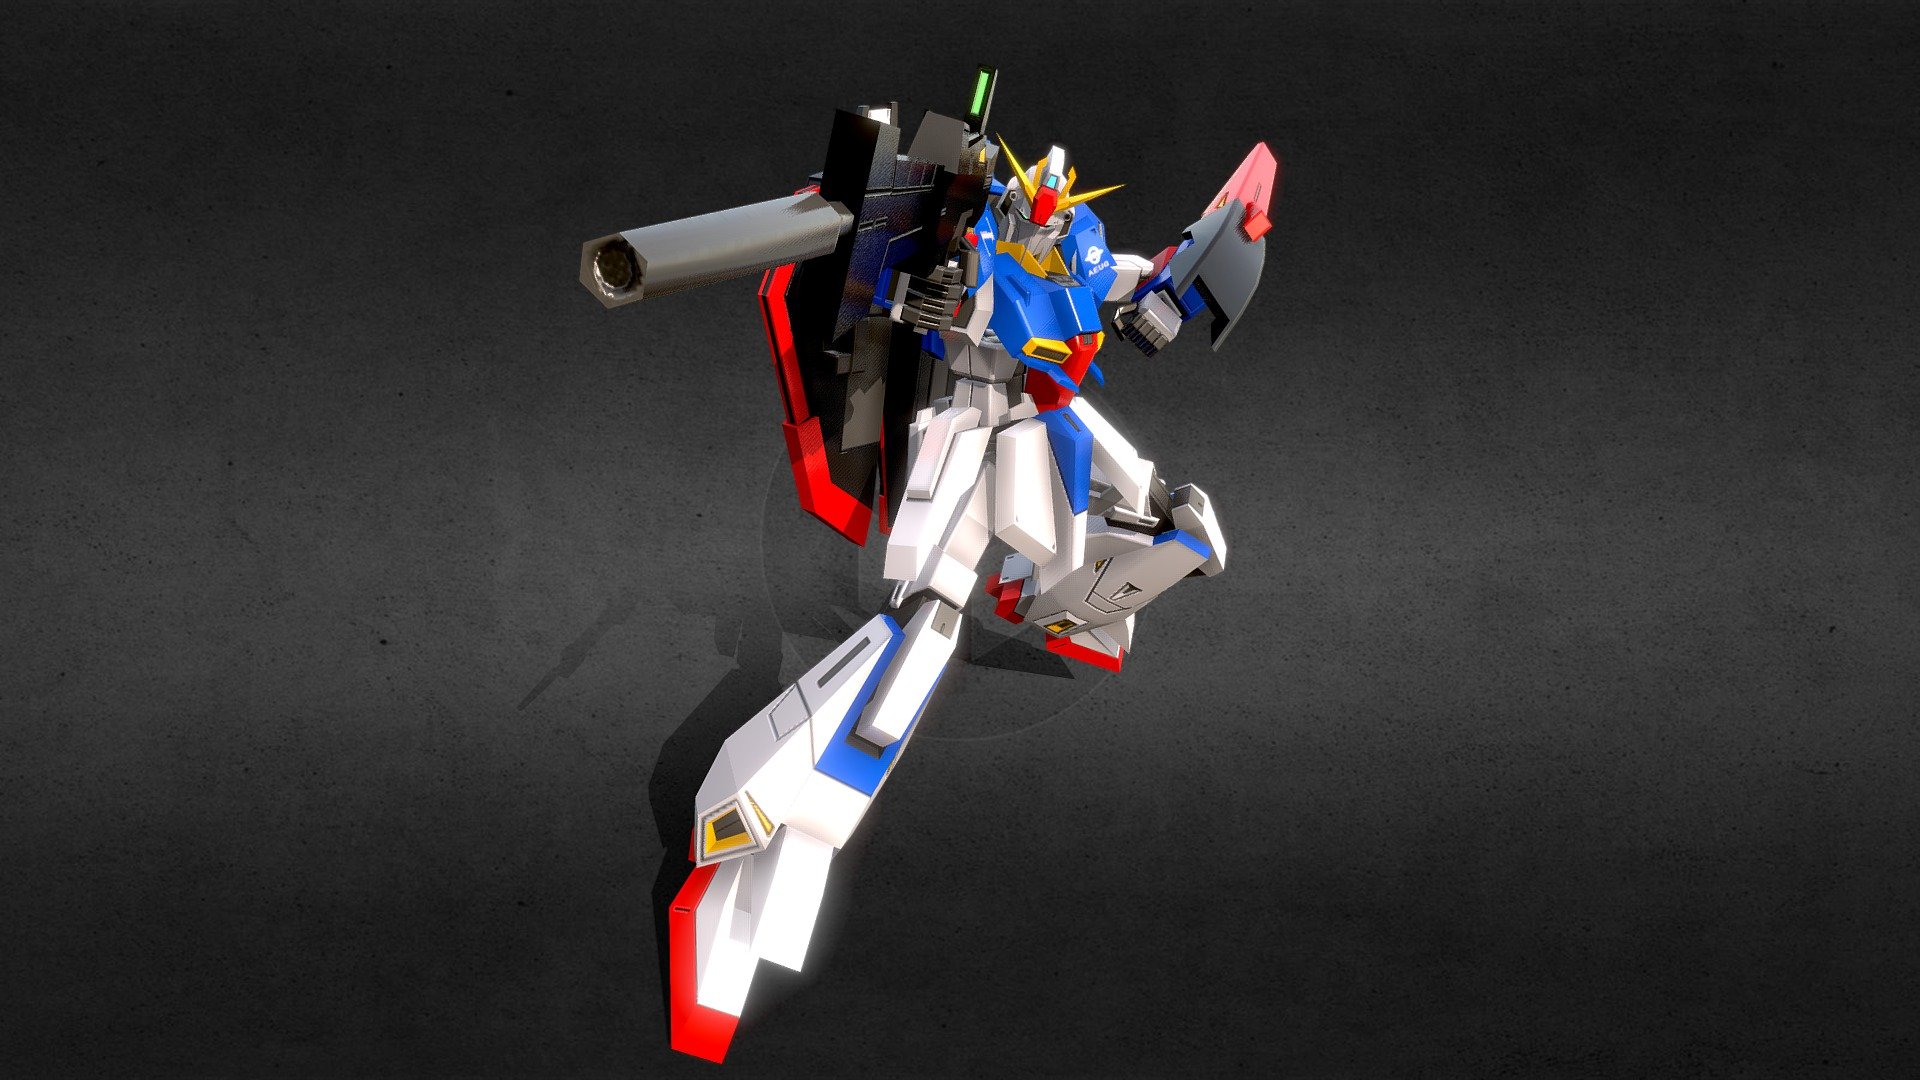 Zガンダム / MSZ-006 Zeta Gundam - 3D model by みそ太郎 (@nama_140 